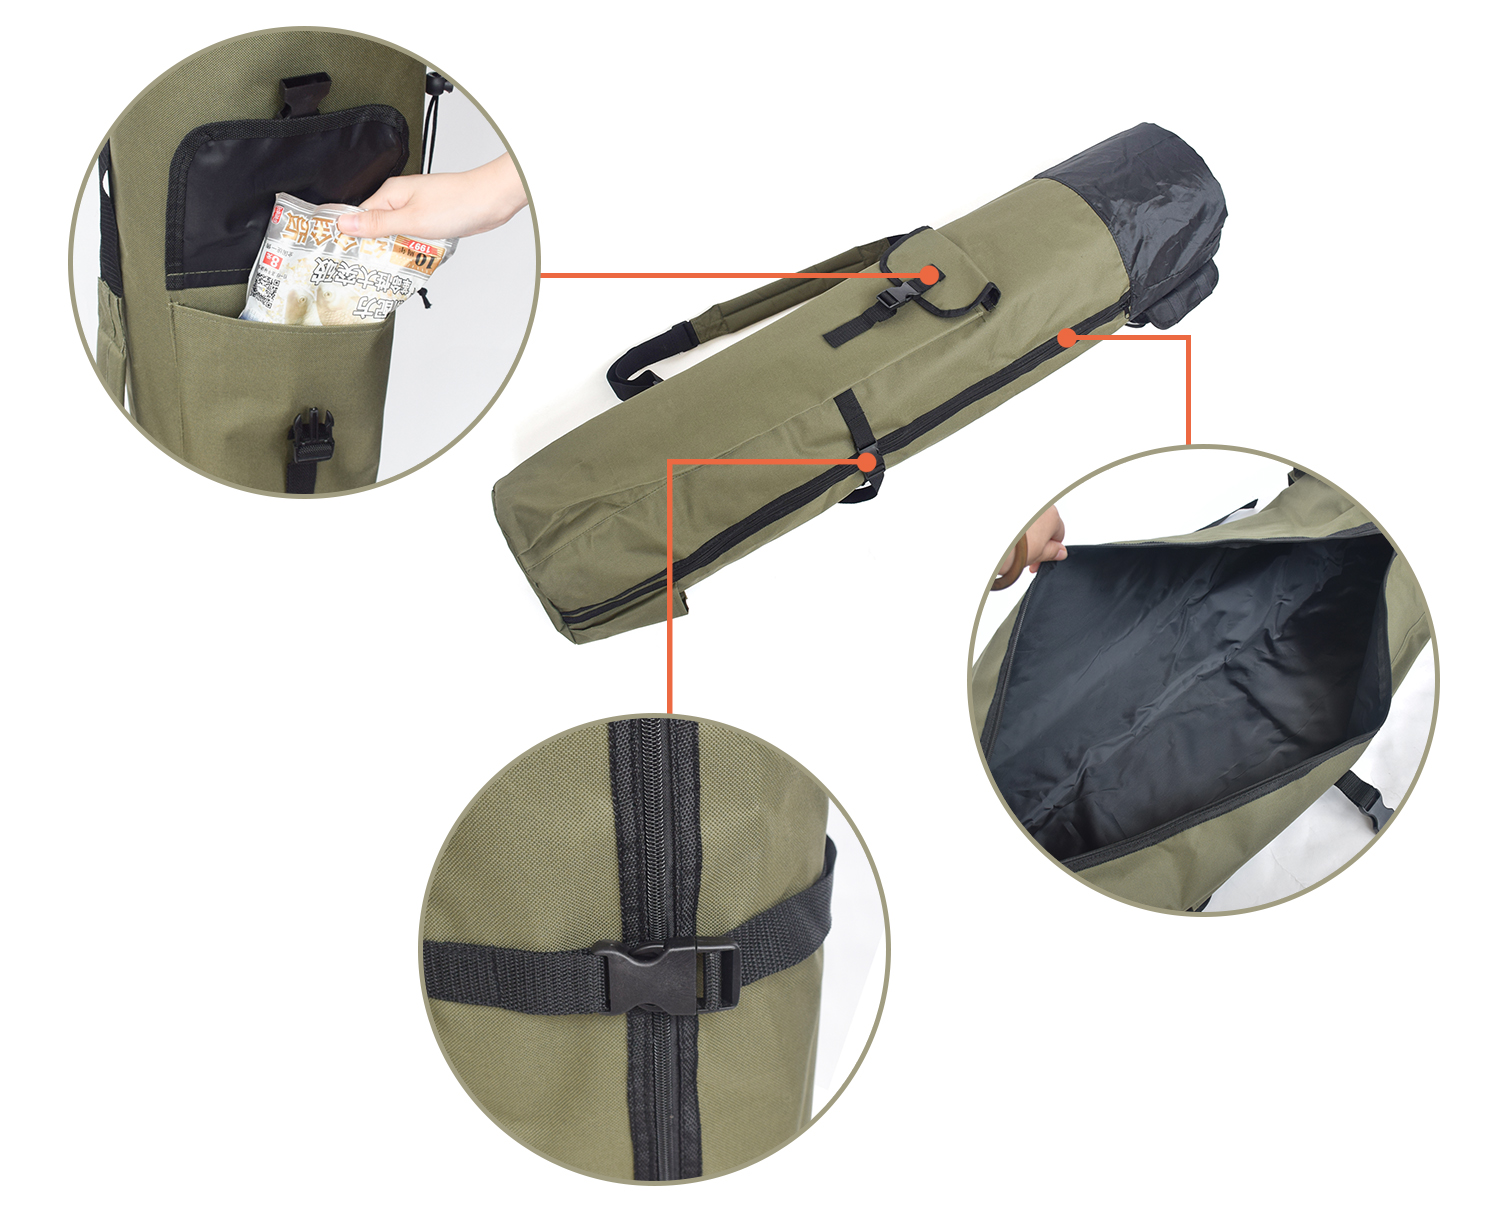 MSDFR-1 Fishing rod bag details1